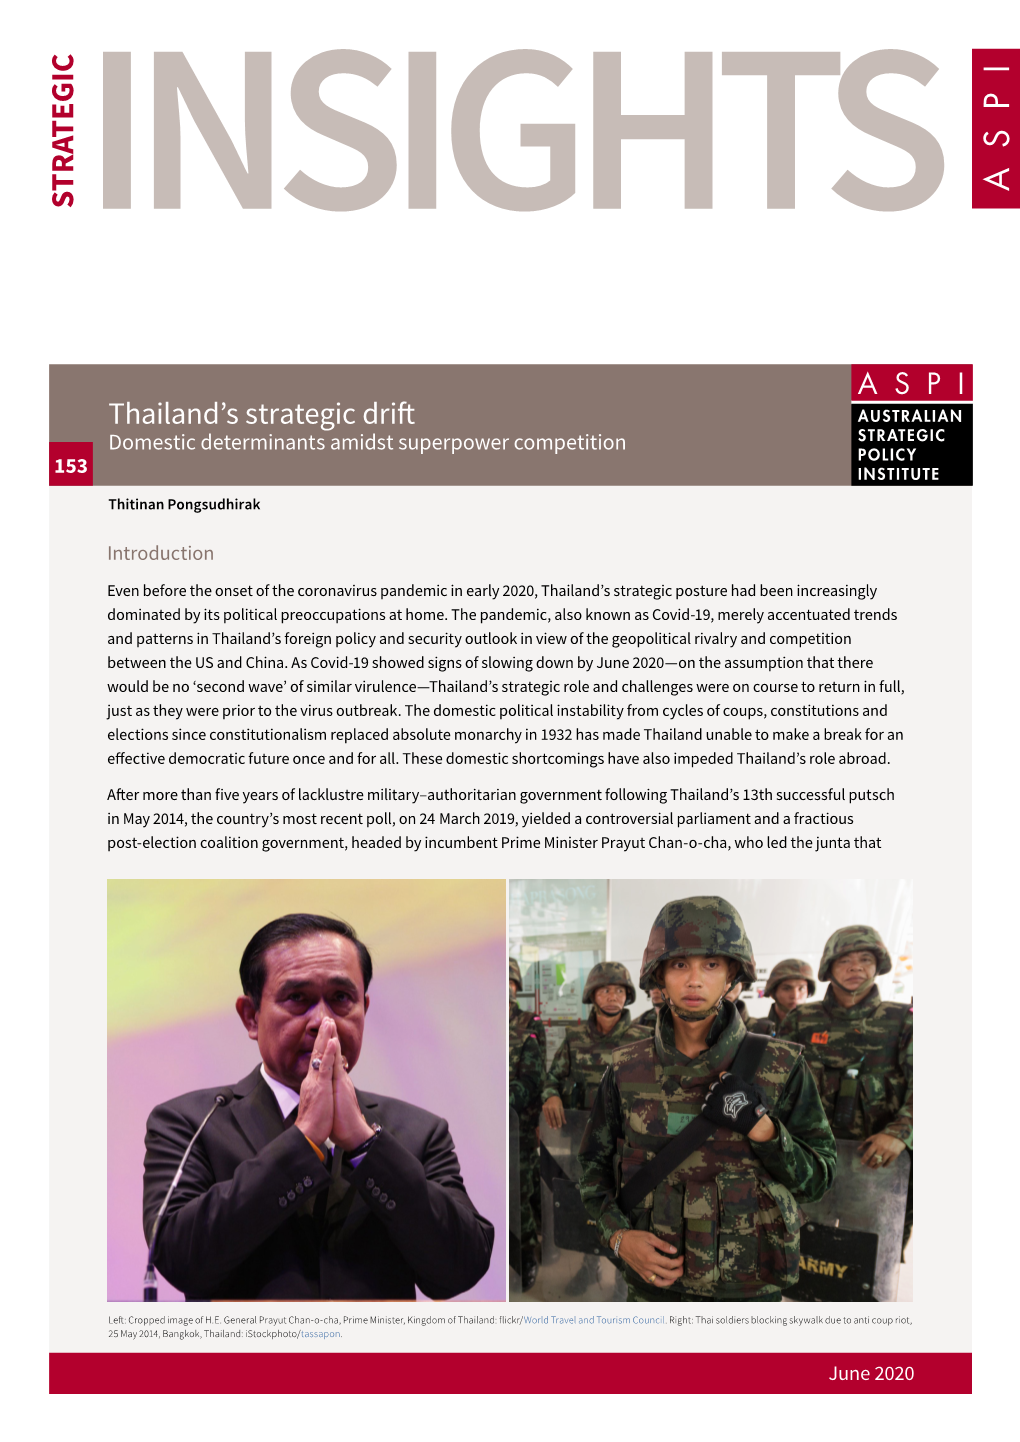 Thailand's Strategic Drift: Domestic Determinants Amidst Superpower